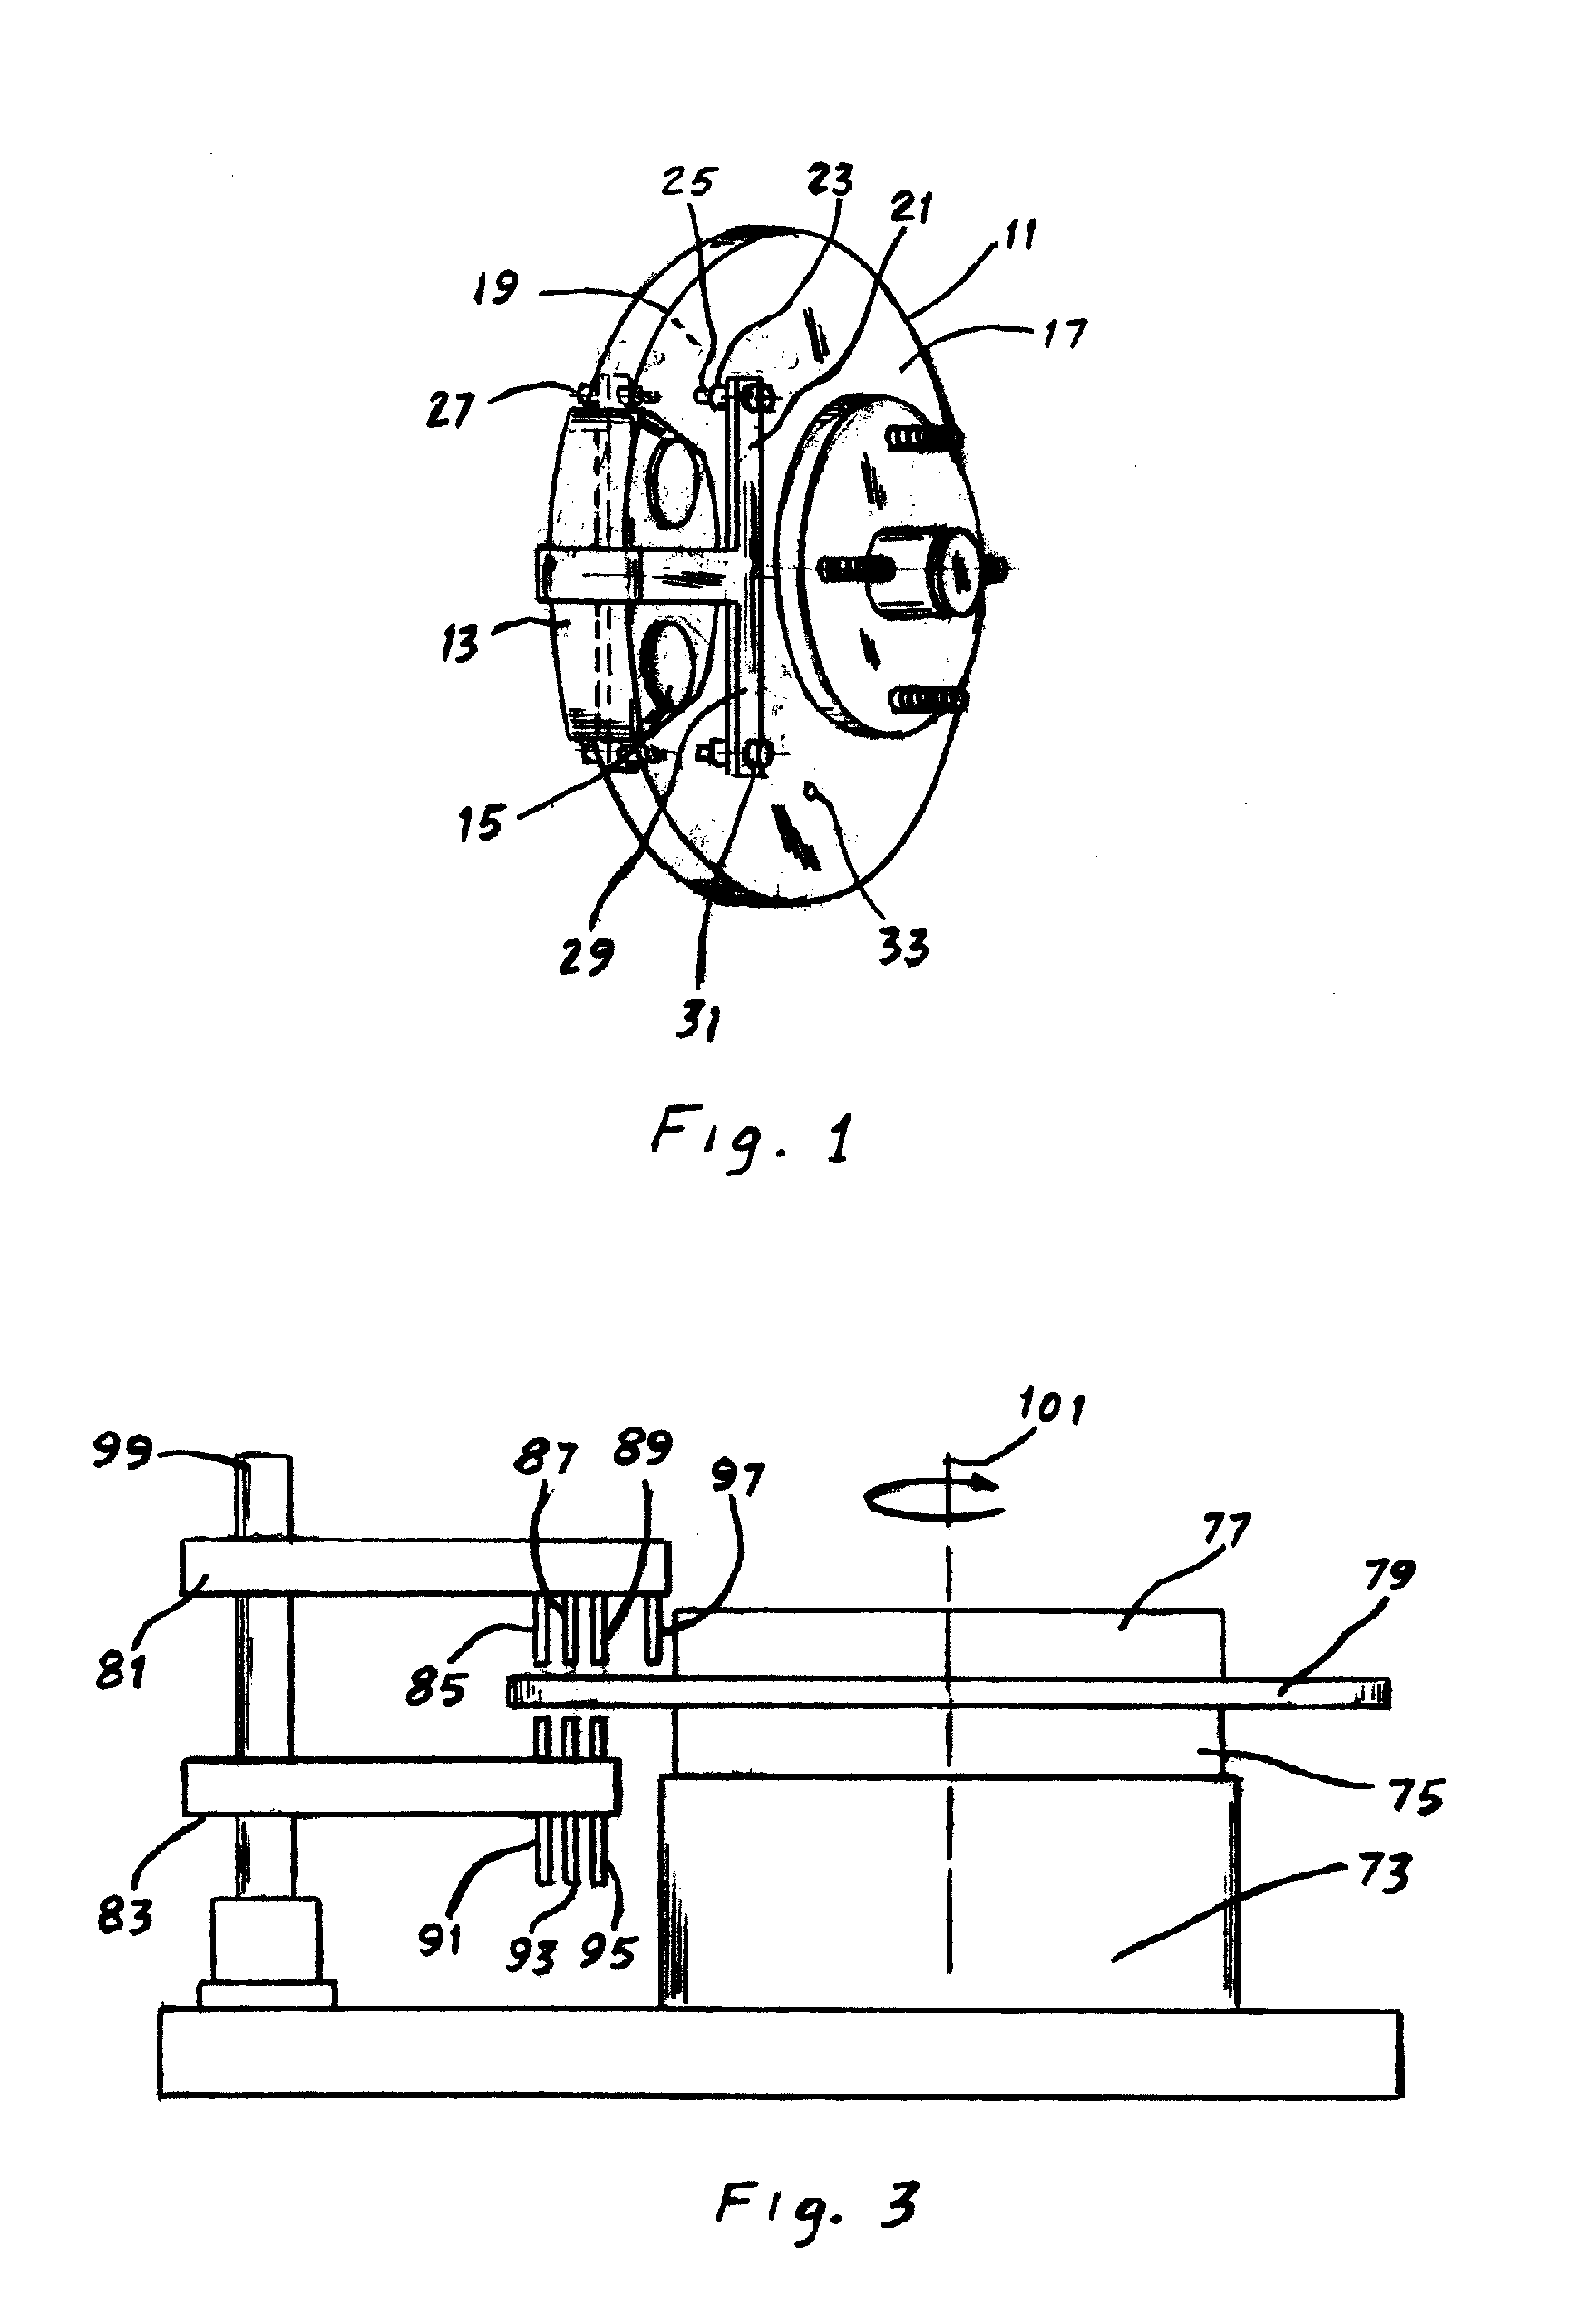 Method of evaluating a disc brake rotor